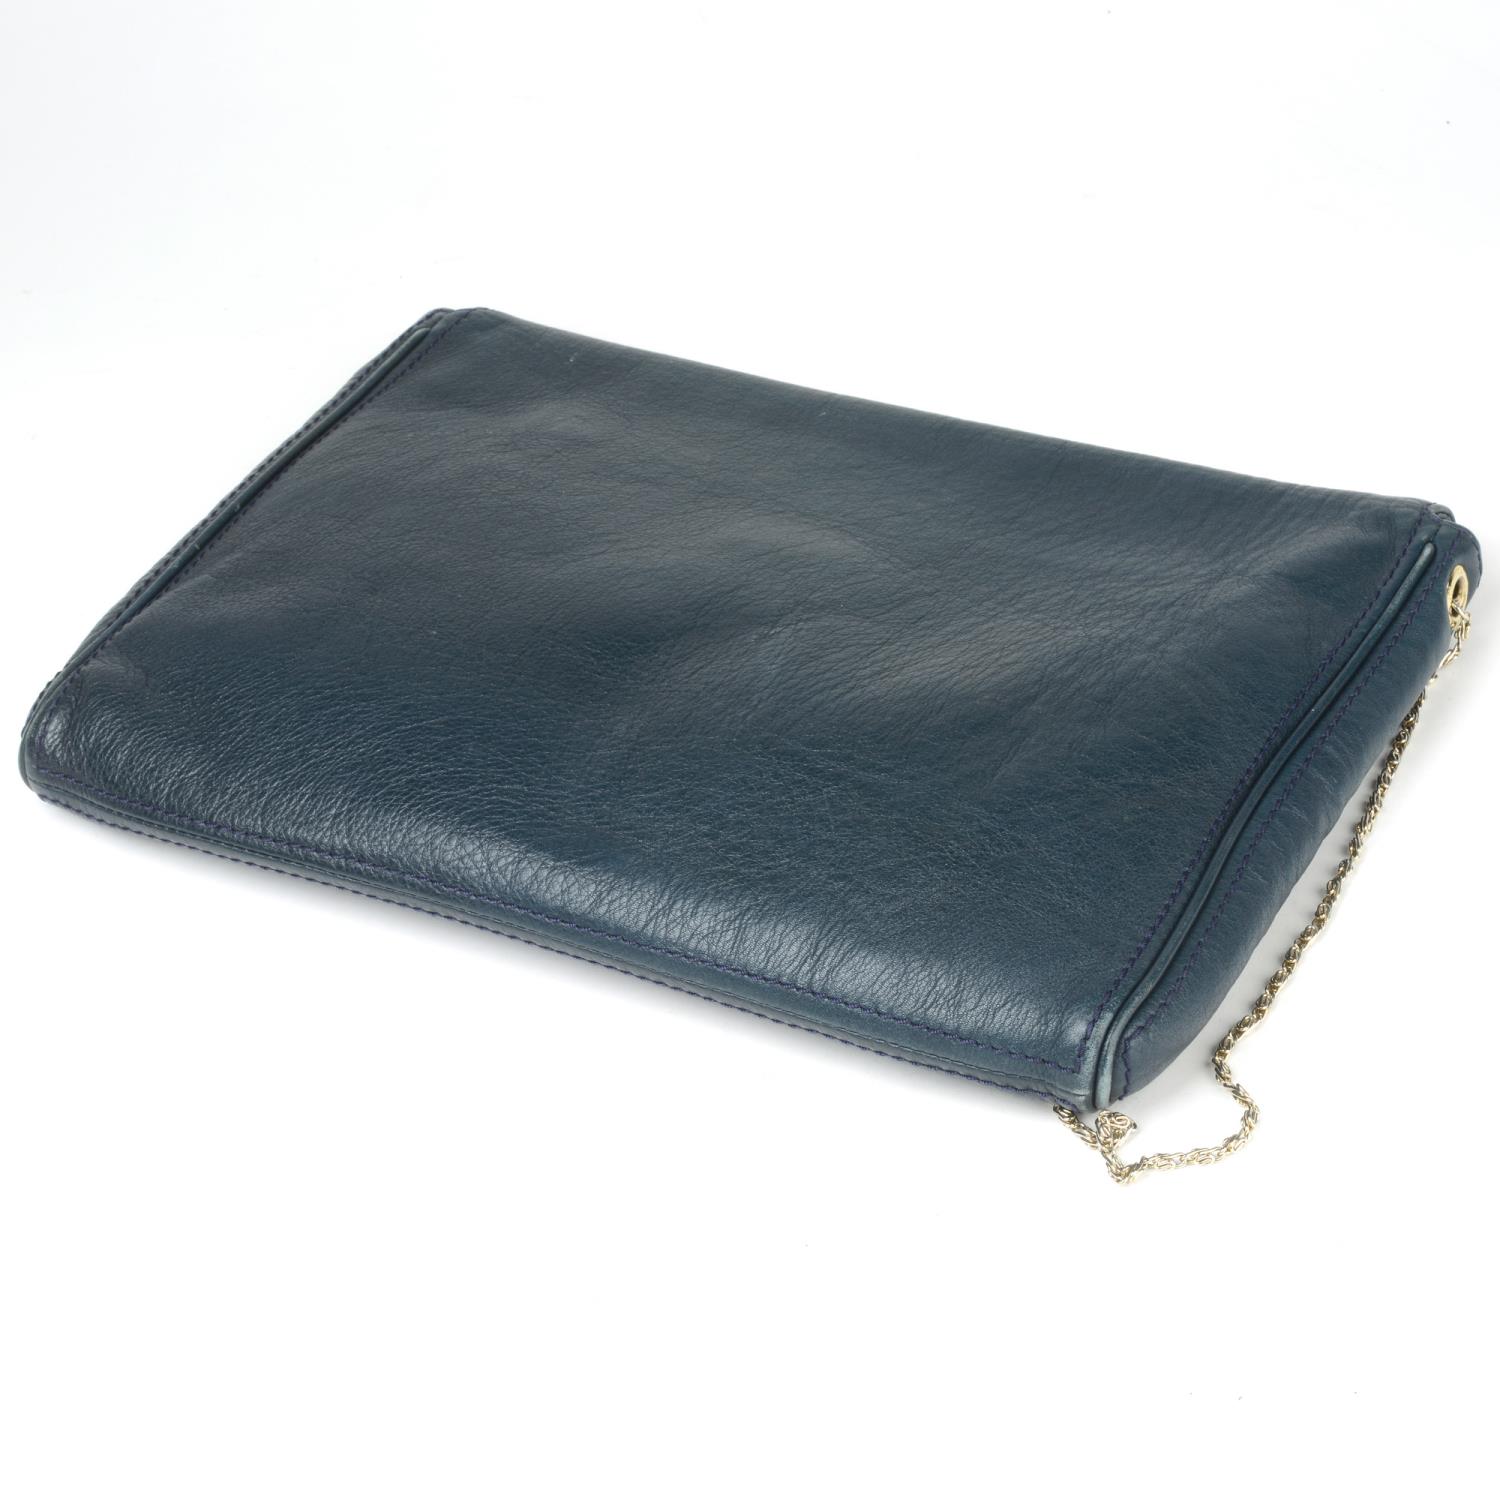 CAROLINA HERRERA - a leather handbag. - Image 3 of 4